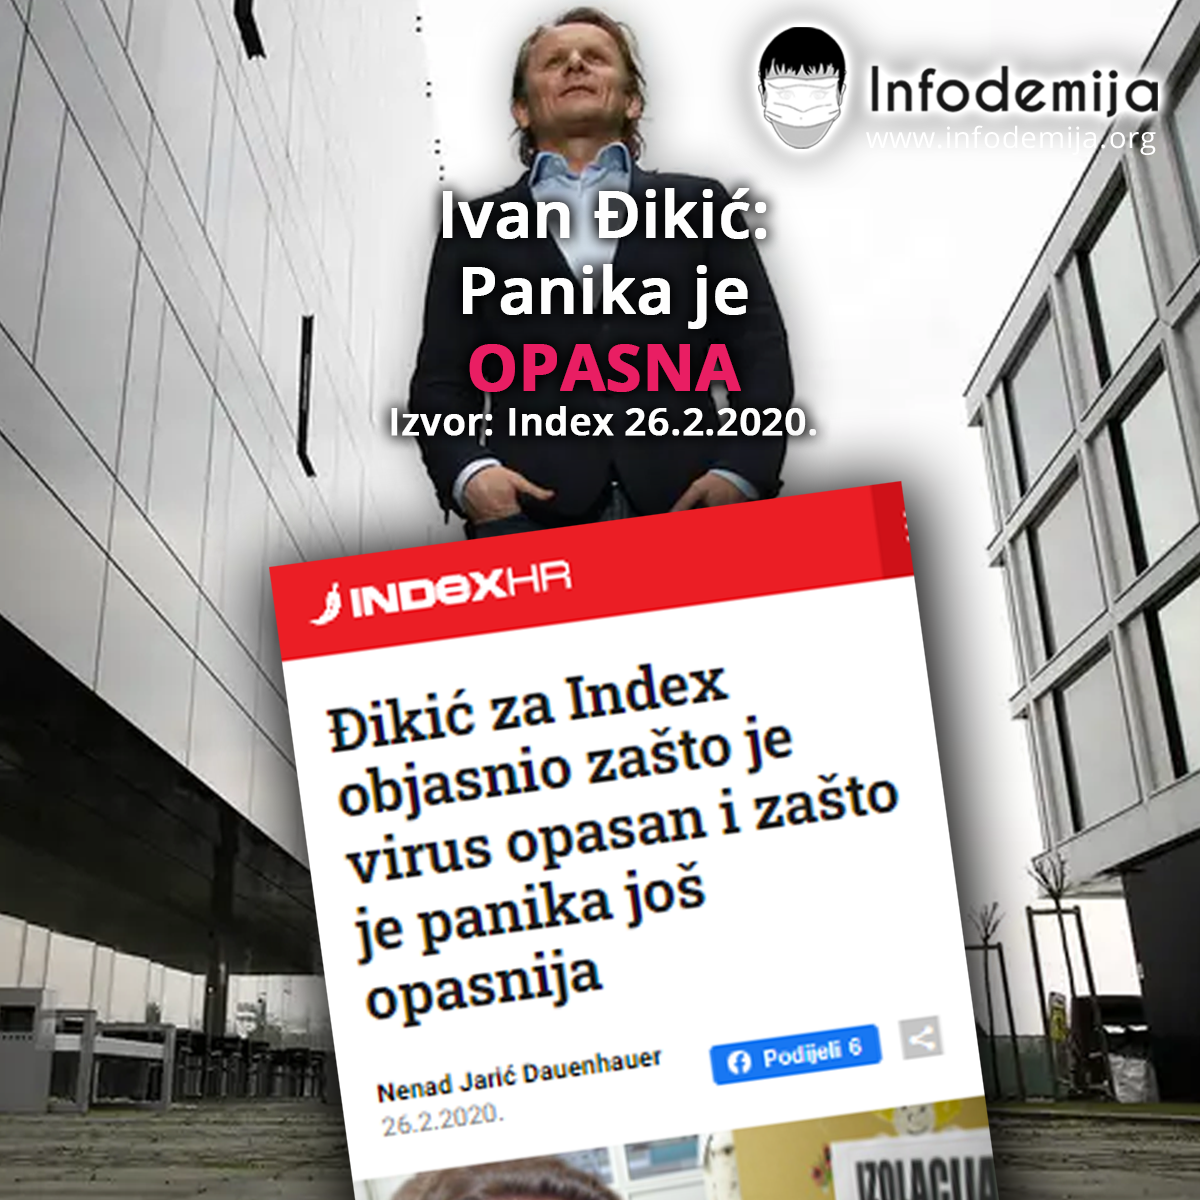 Ivan Đikić - Panika je opasna